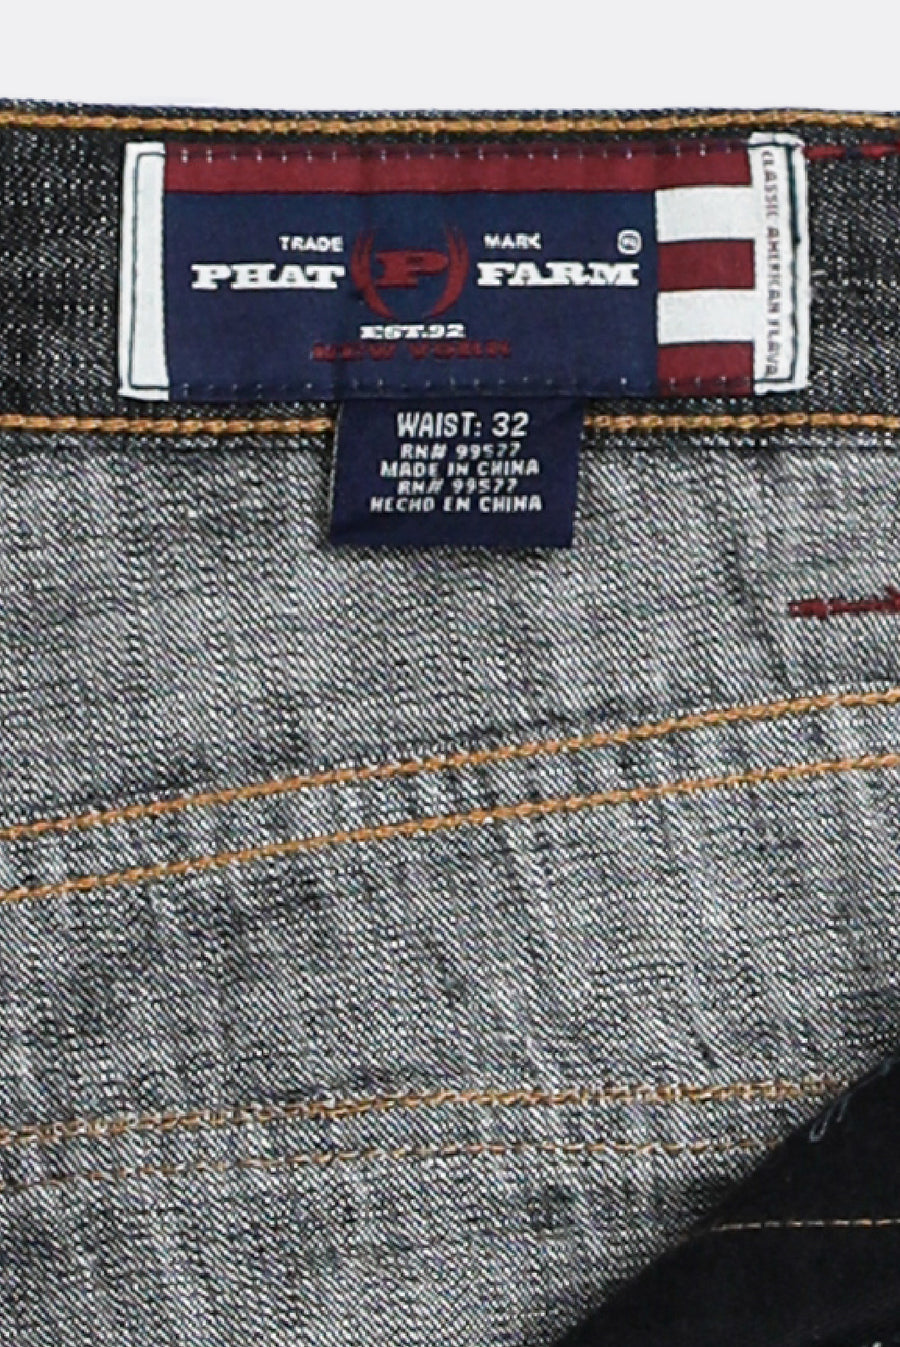 Deadstock Phat Farm Denim Shorts  - W34